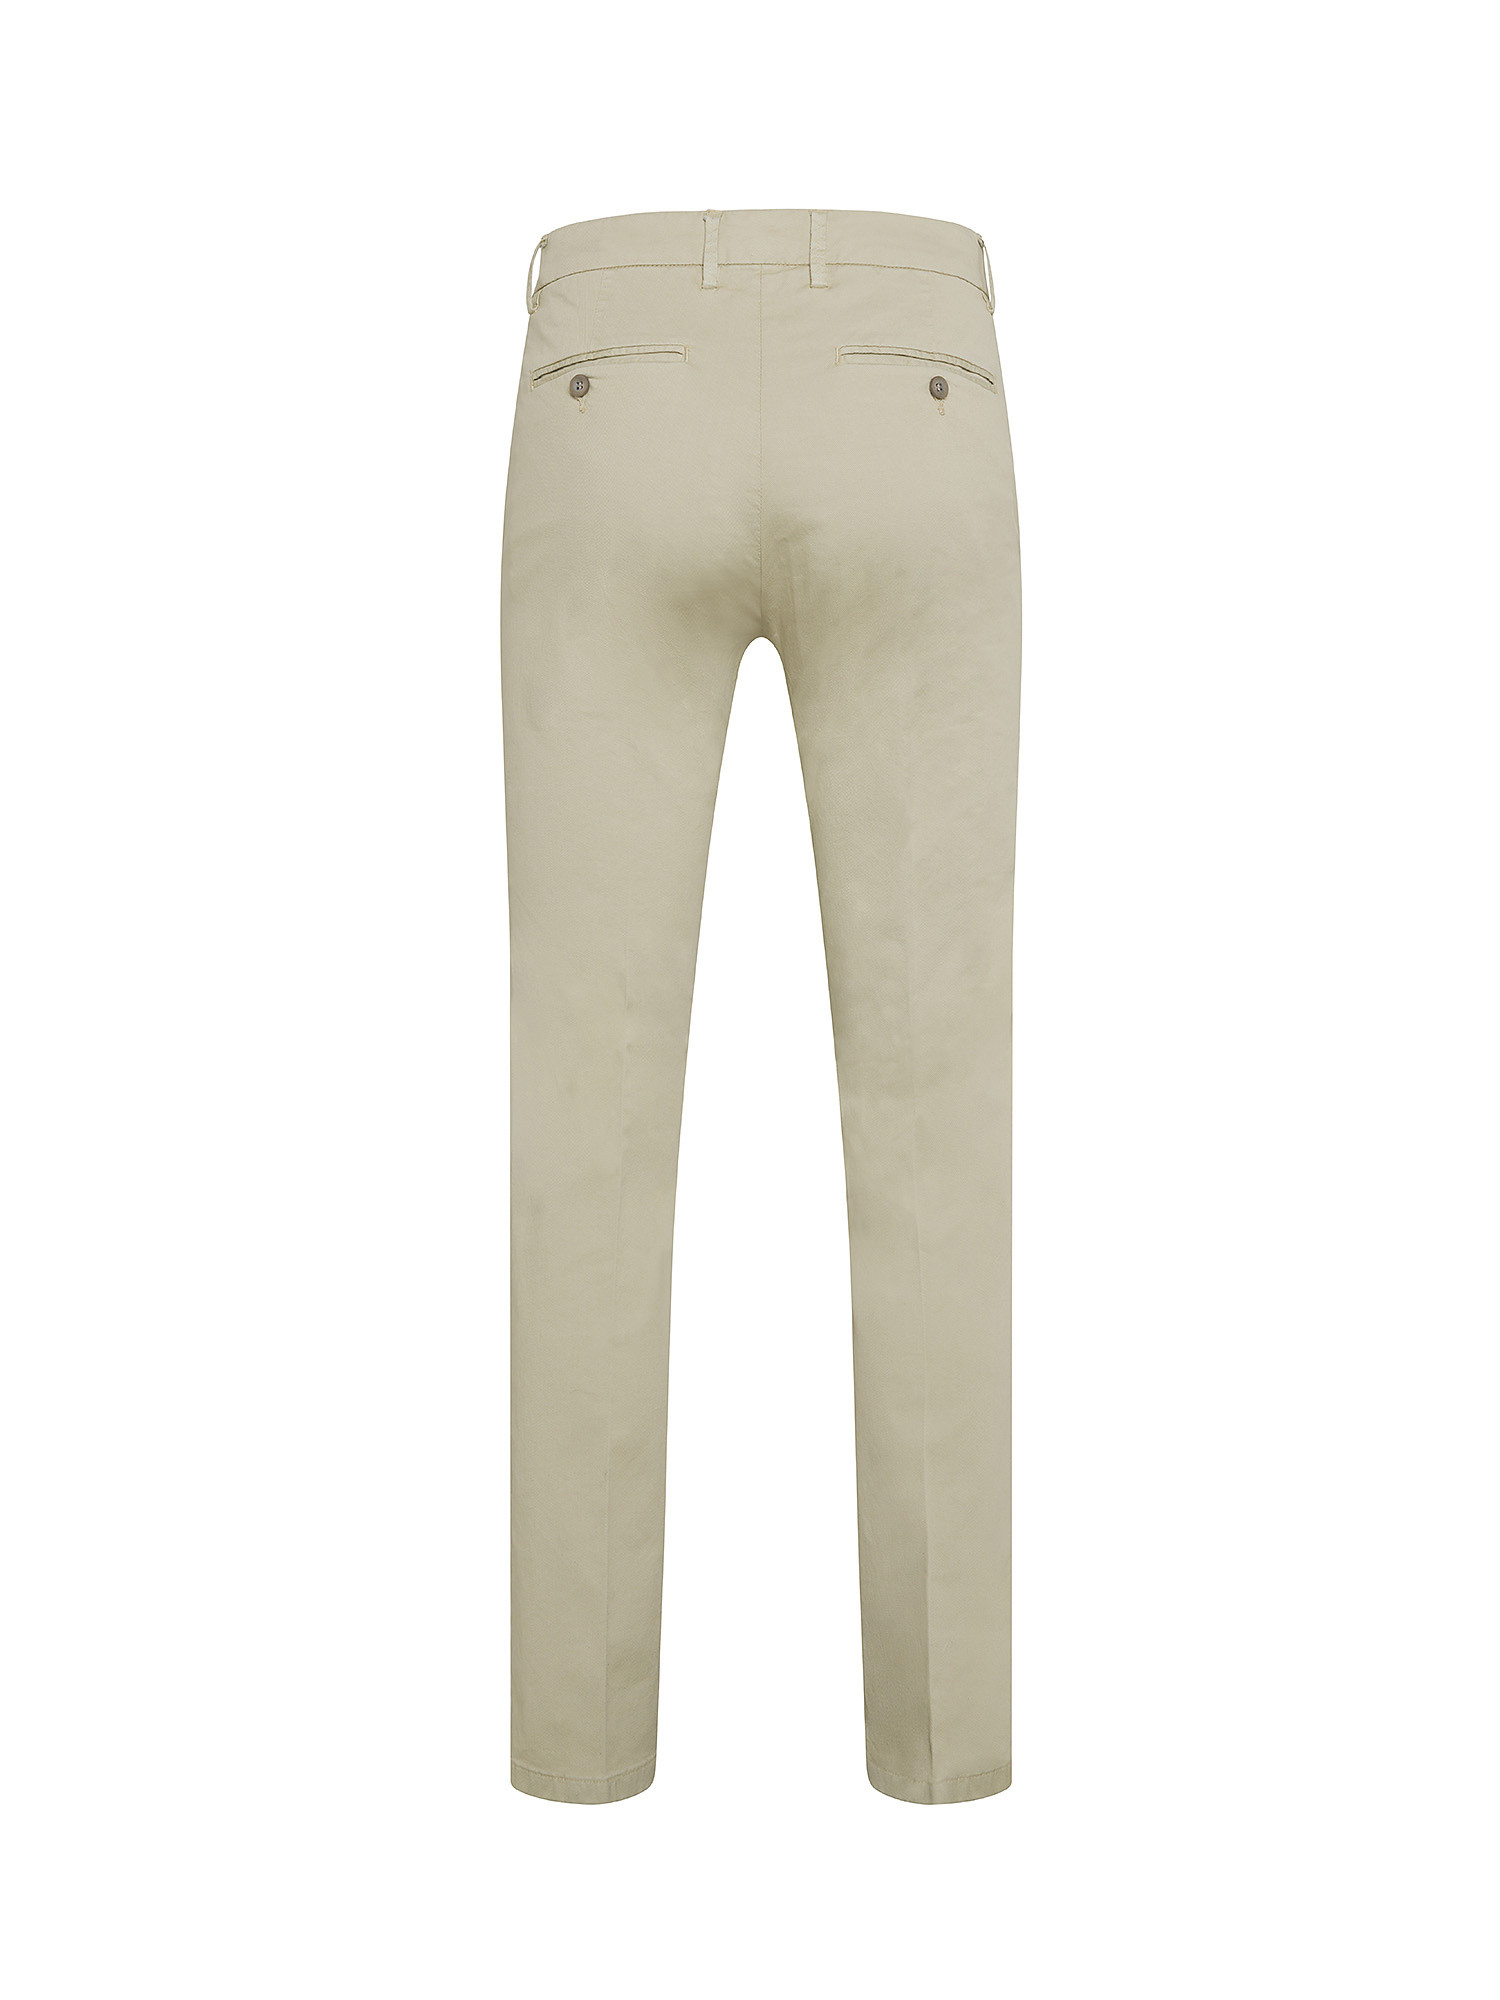 Siviglia - Pantaloni chino, Beige, large image number 1